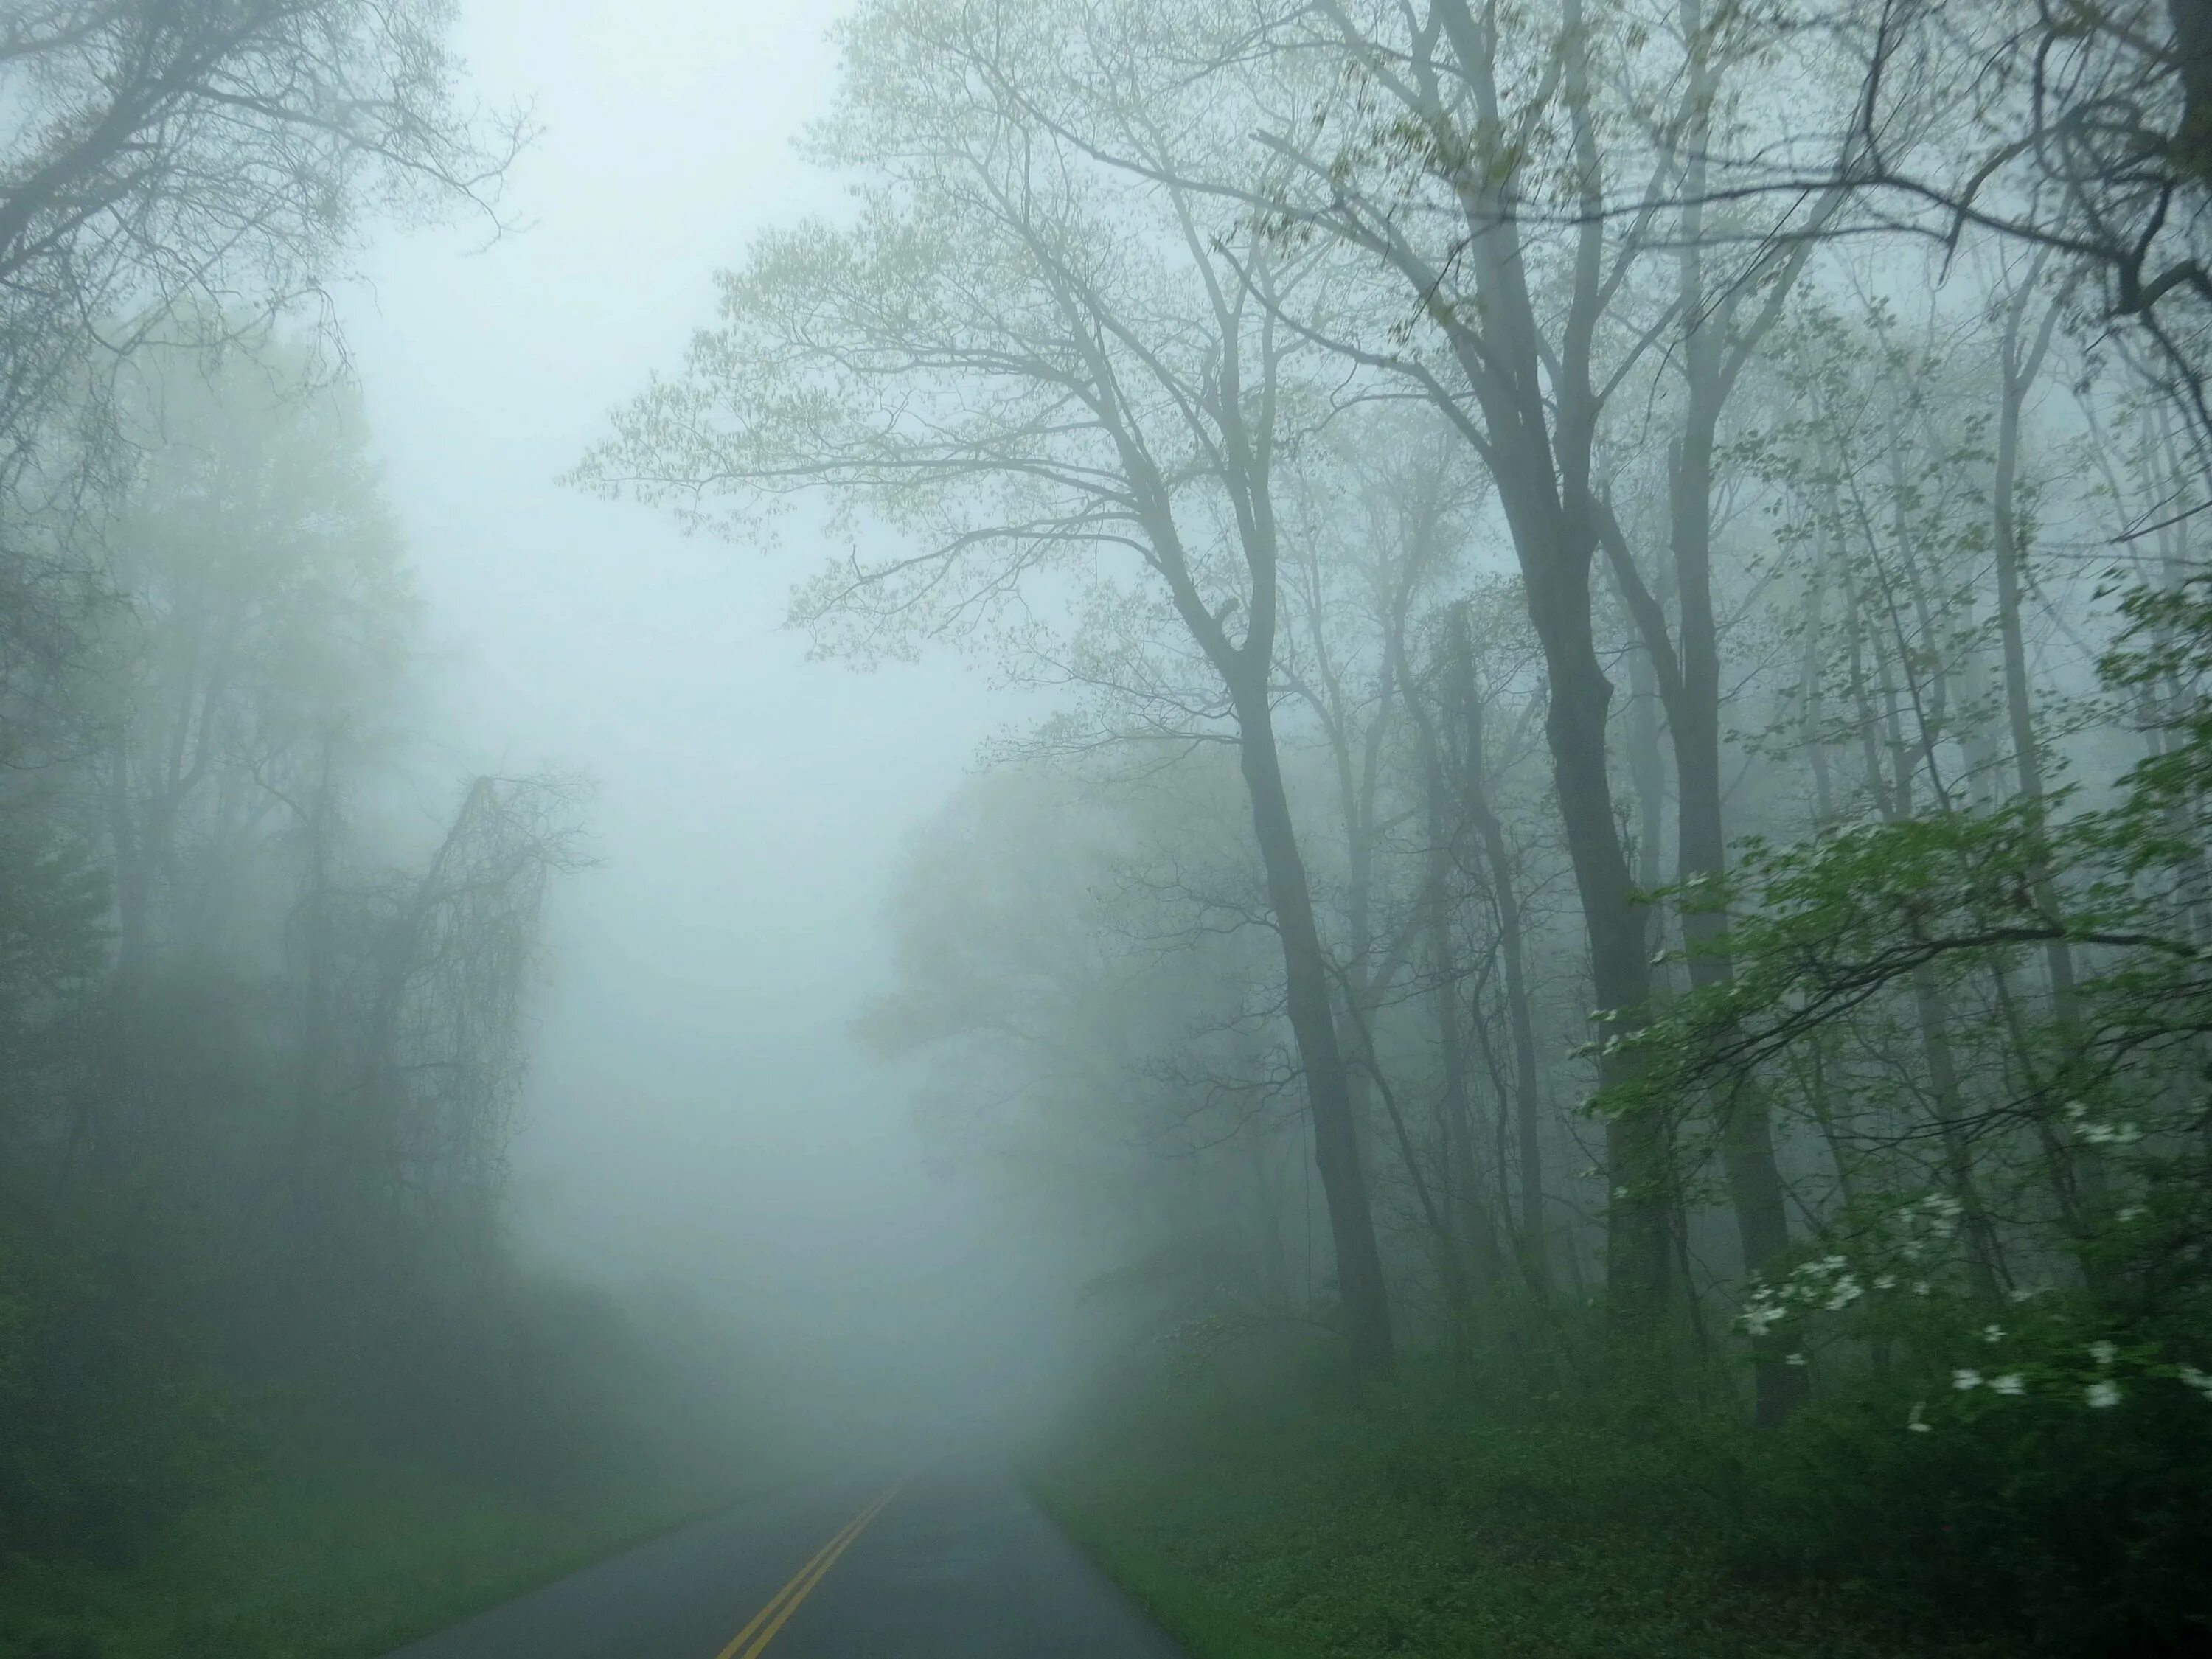 Где туман. Лес в тумане. Туманный пейзаж. Красивая природа в тумане. Сильный туман в лесу.